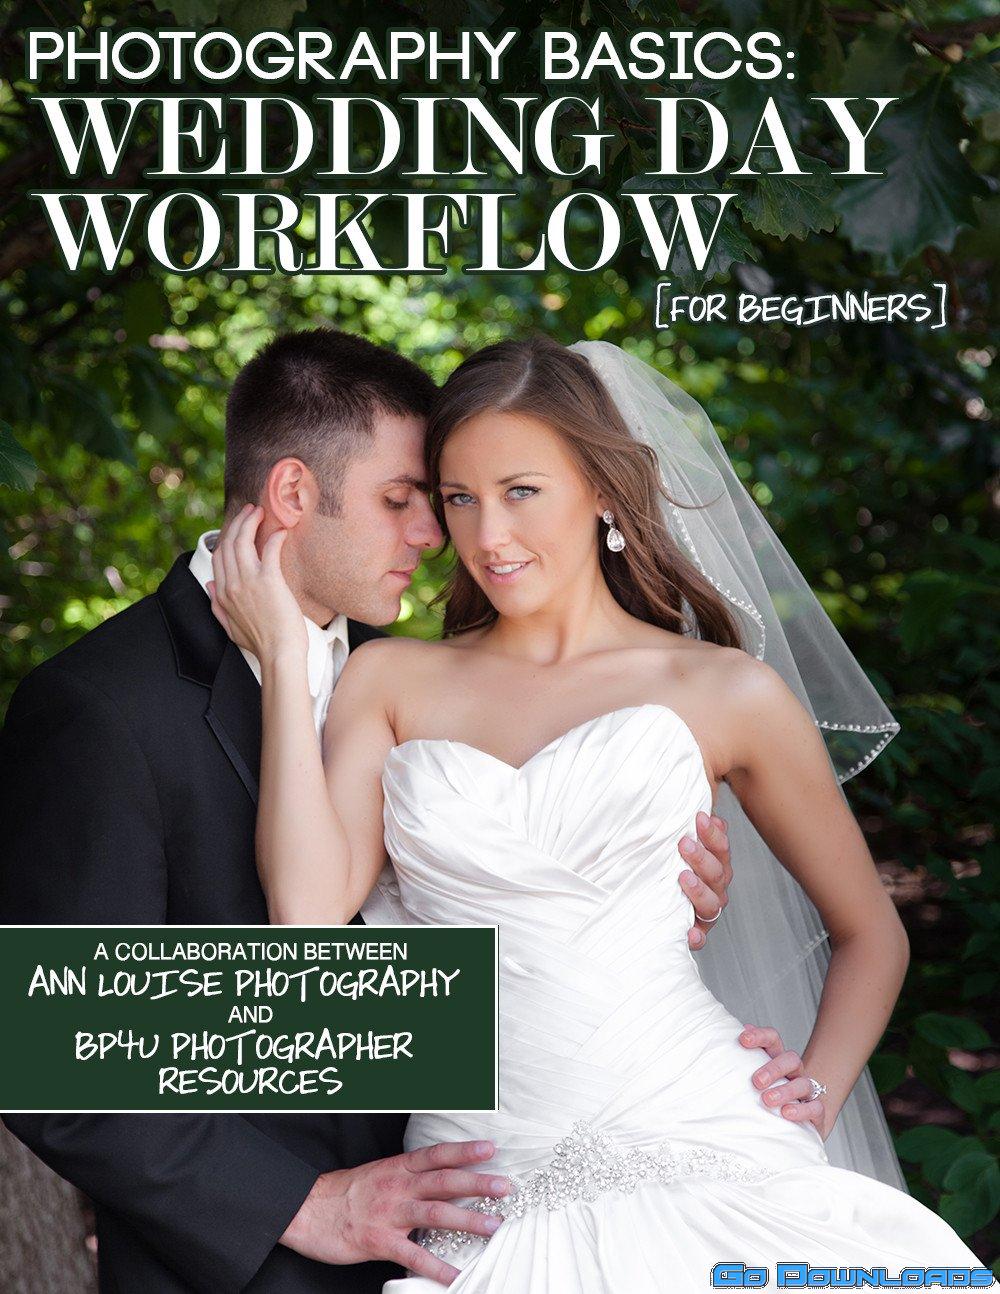 PHOTOGRAPHY BASICS: WEDDING DAY WORKFLOW